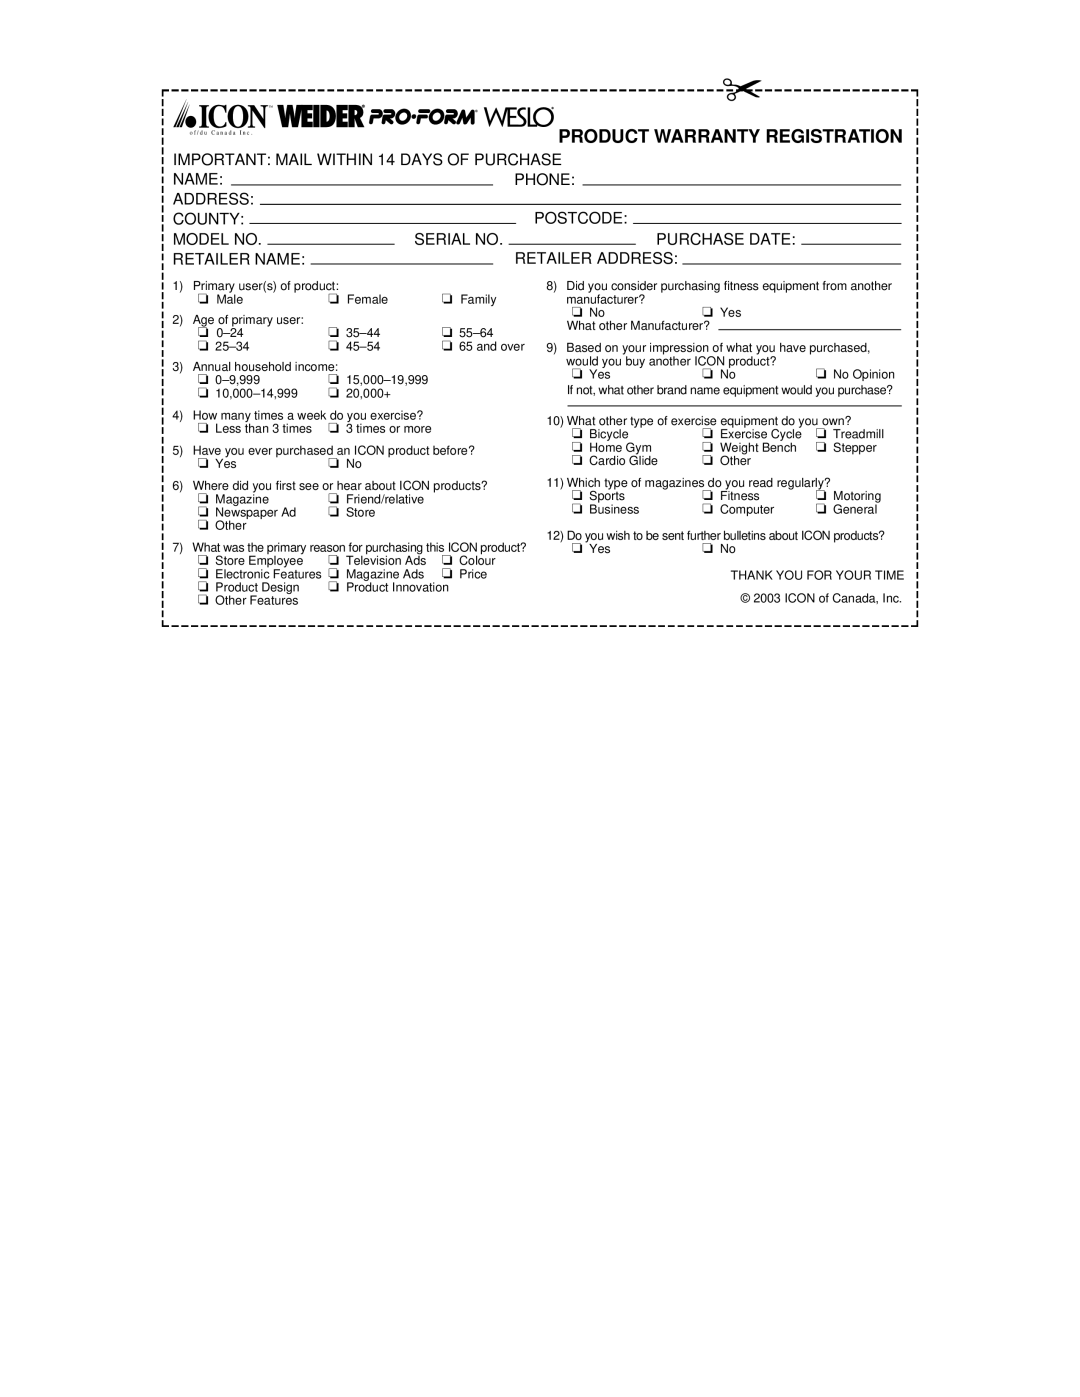 Weslo WCTL38410 user manual Product Warranty Registration 